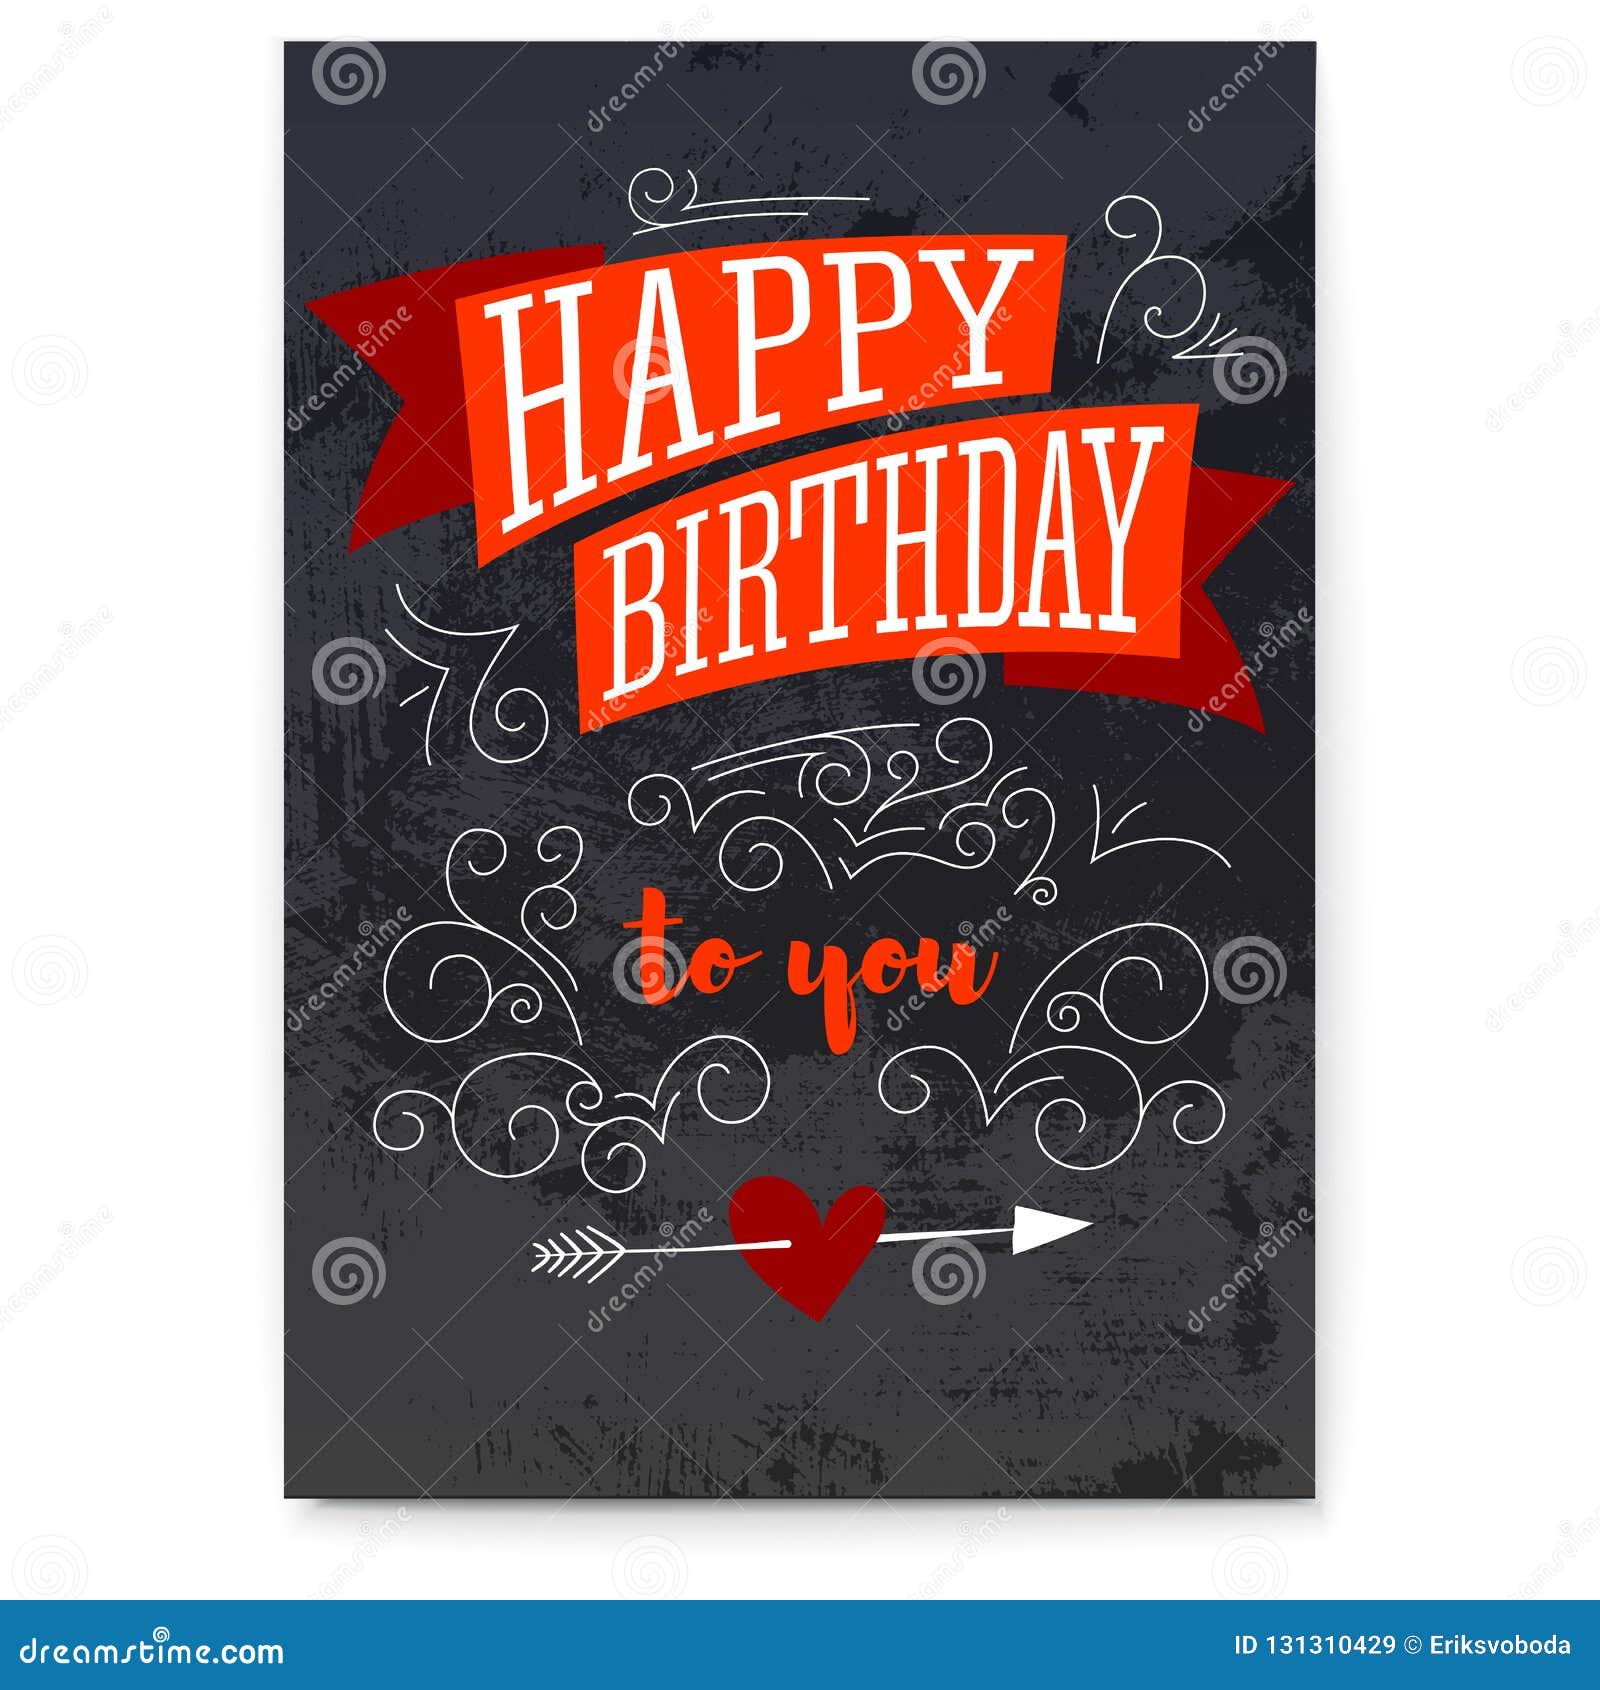 happy birthday vintage textured poster design text lettering stylish greetings happy birthday creative birthday card 131310429